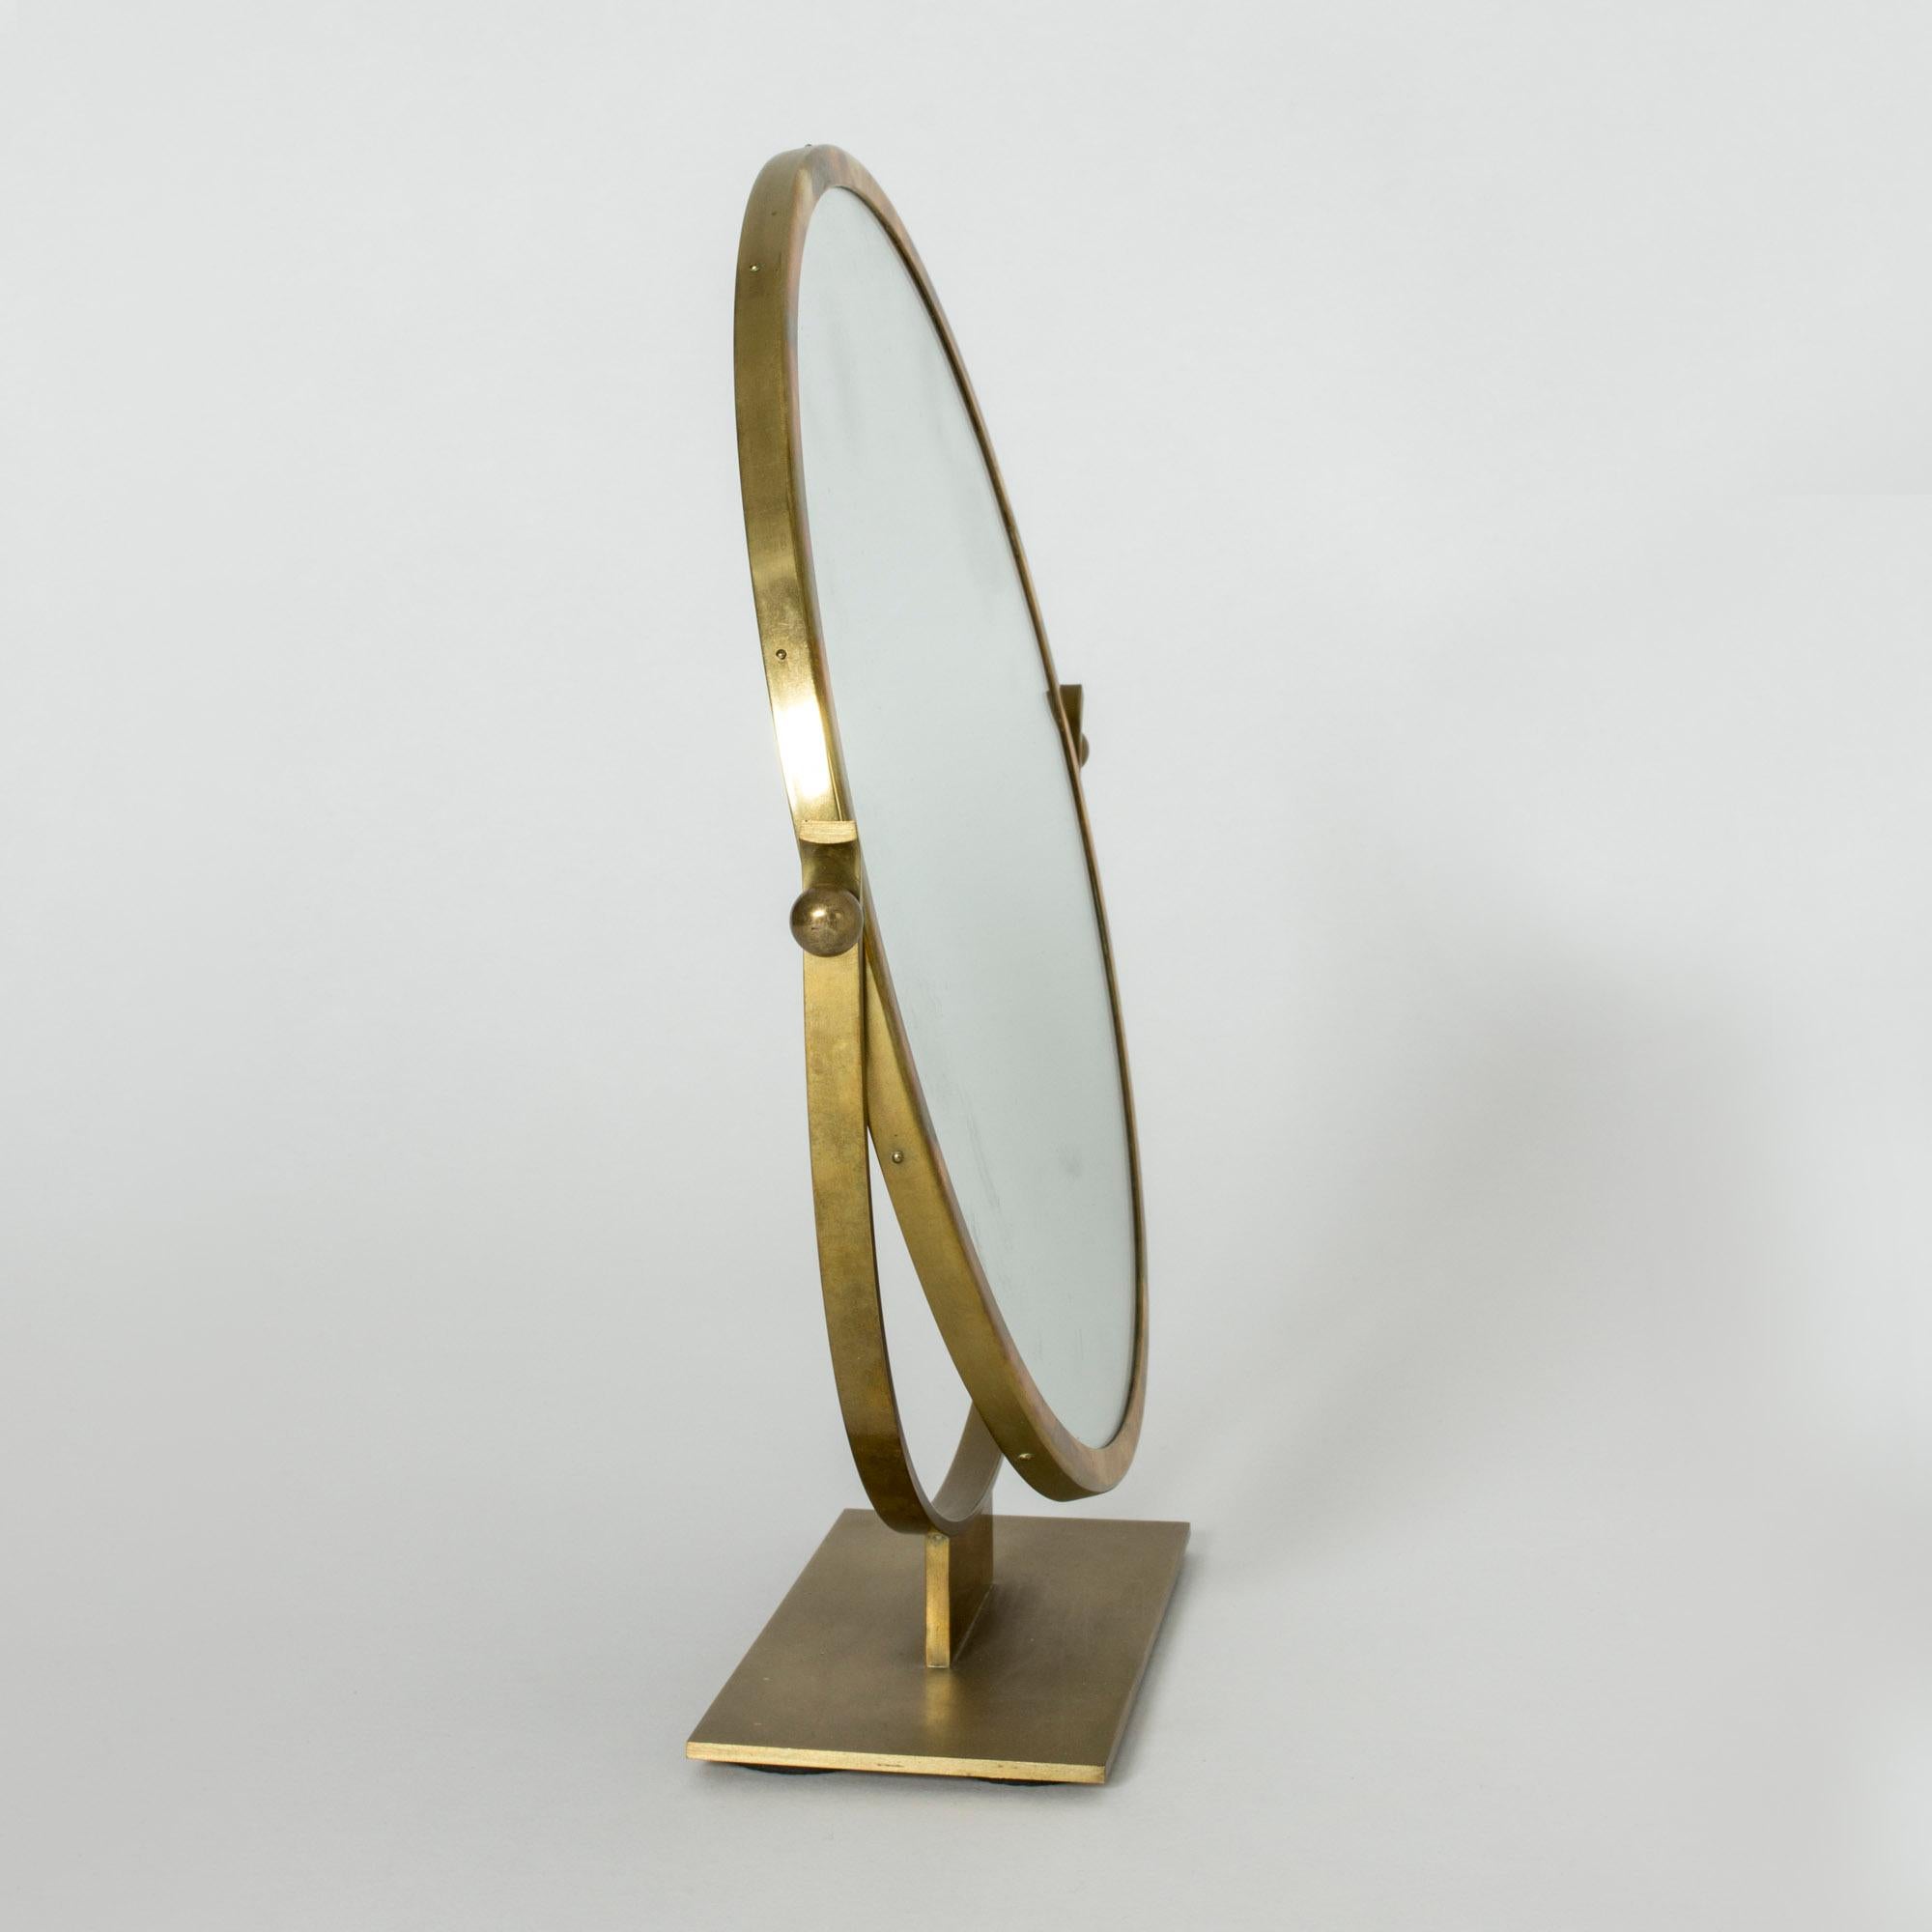 Scandinavian Modern Brass Table Mirror by Ivar Ålenius-Björk